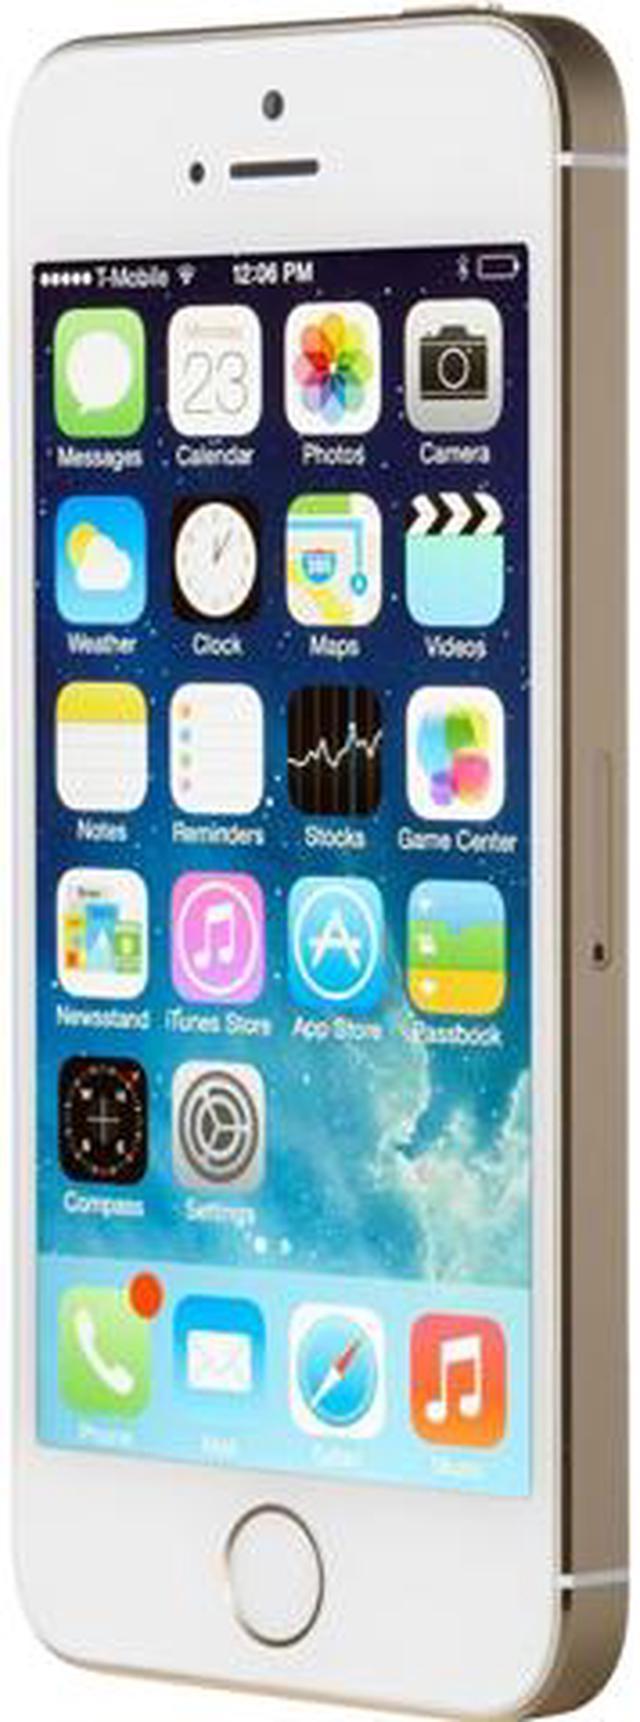 Held og lykke Traktat sol Refurbished: Apple iPhone 5s 4G LTE Unlocked Cell Phone 4.0" Gold 16GB 1GB  RAM Cell Phones - Unlocked - Newegg.com